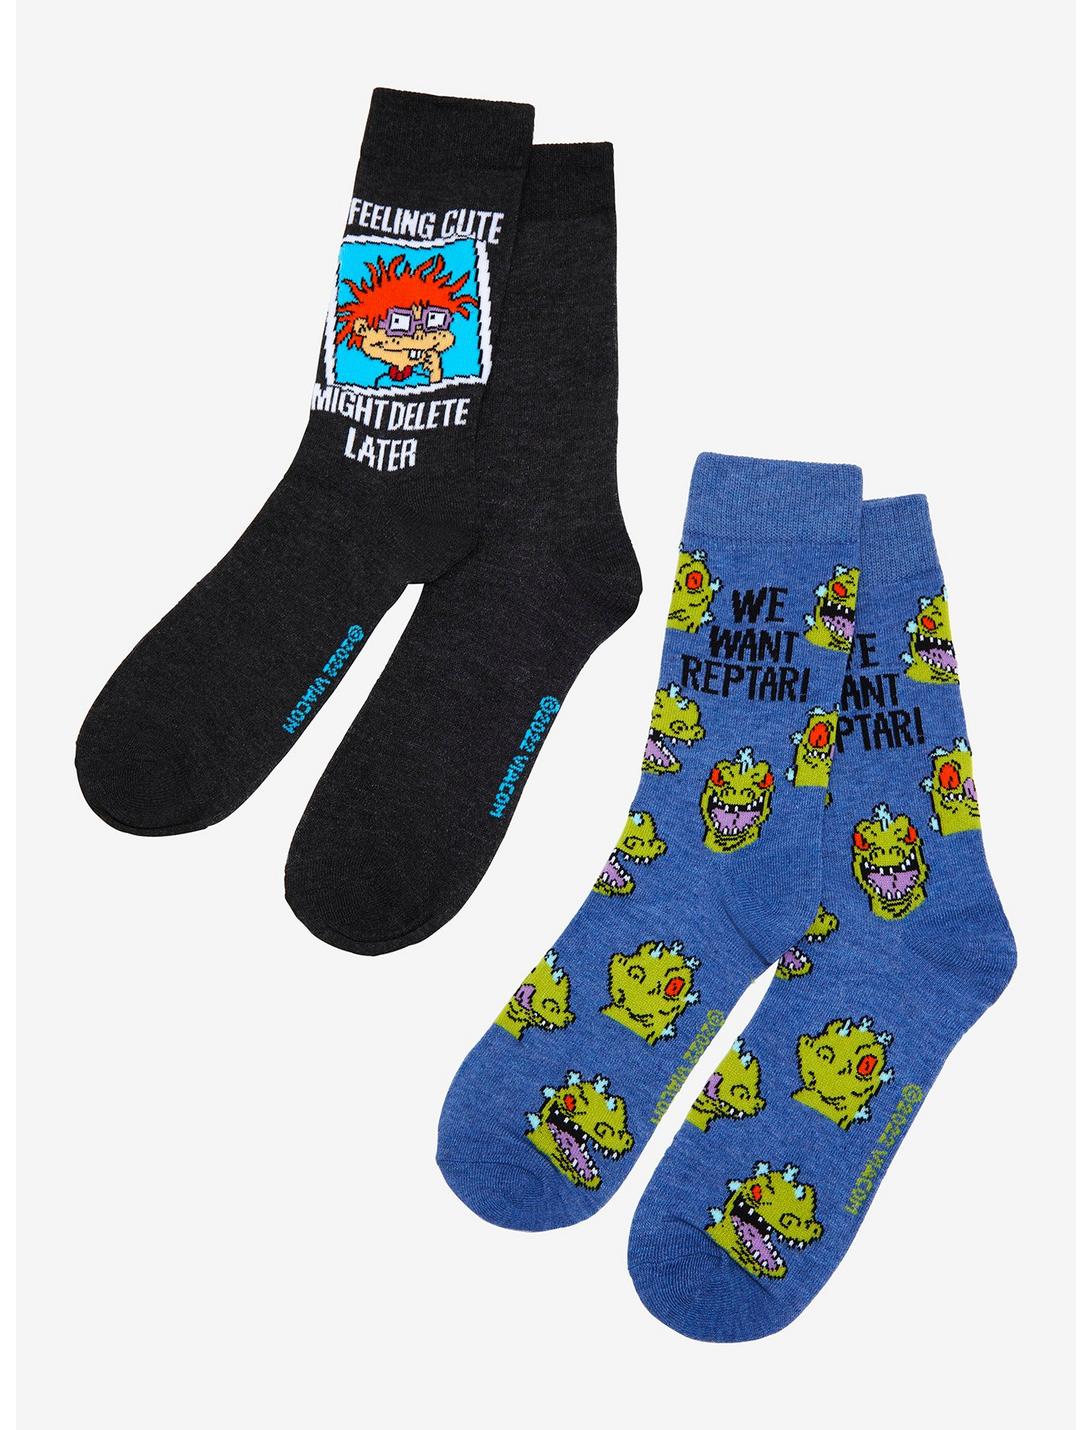 Rugrats Reptar & Chuckie Crew Socks 2 Pair, , hi-res